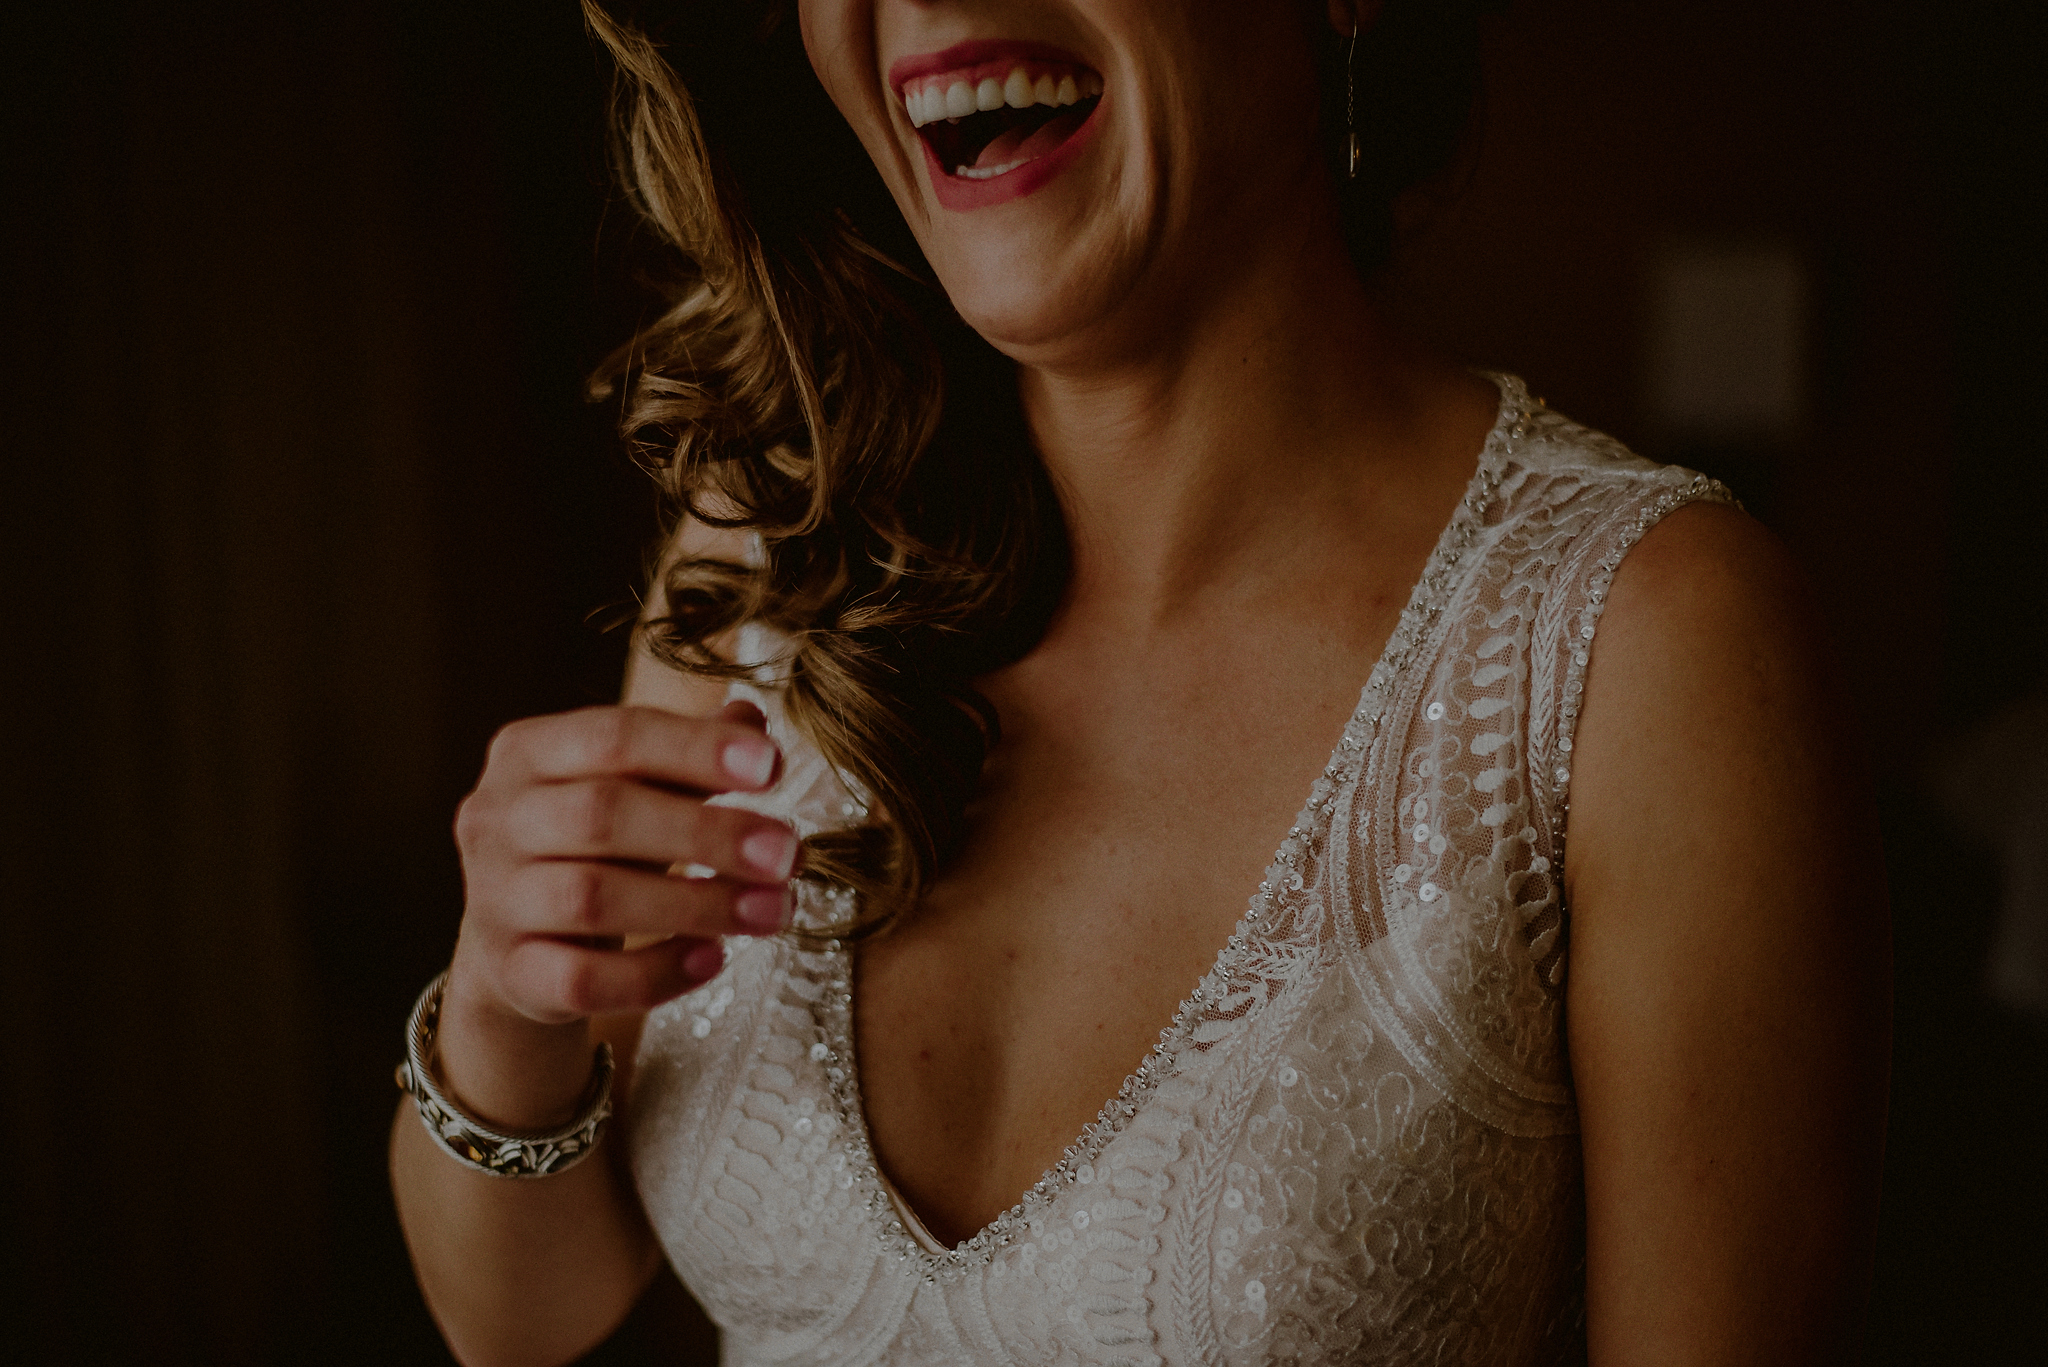 Polish wedding - bride laughing by Carolina Rivera